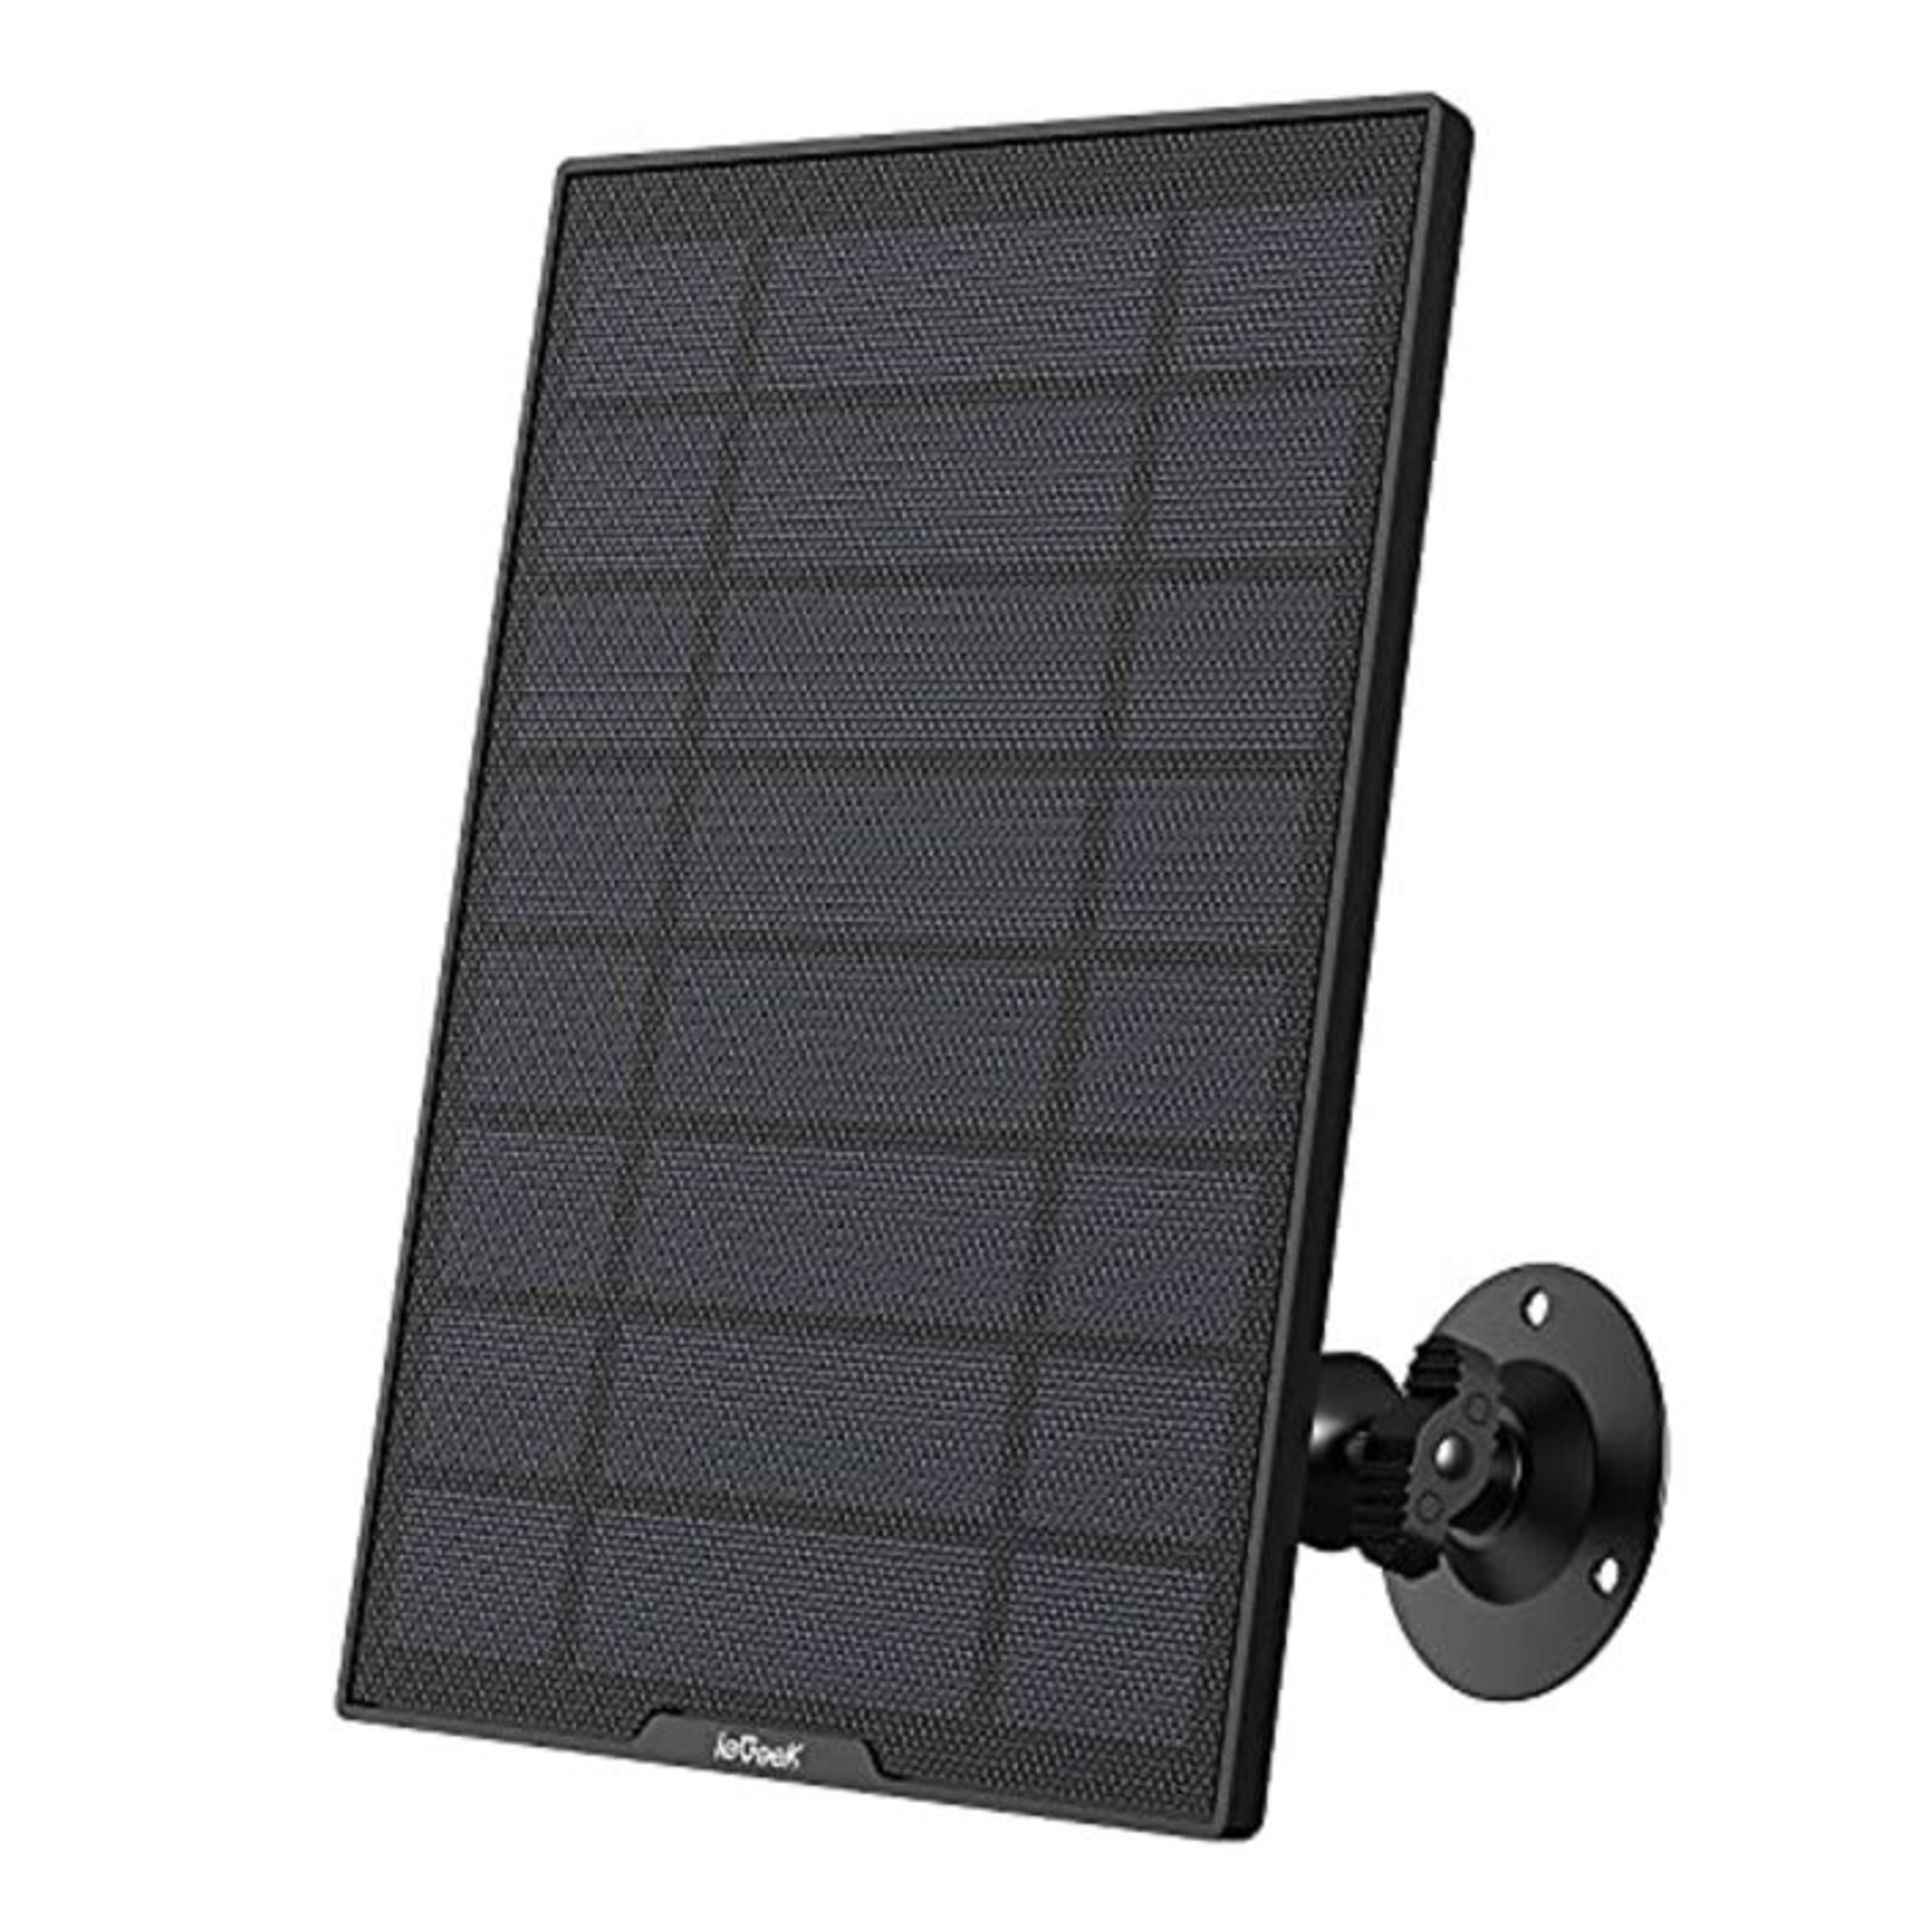 ieGeek cctv camera solar panel